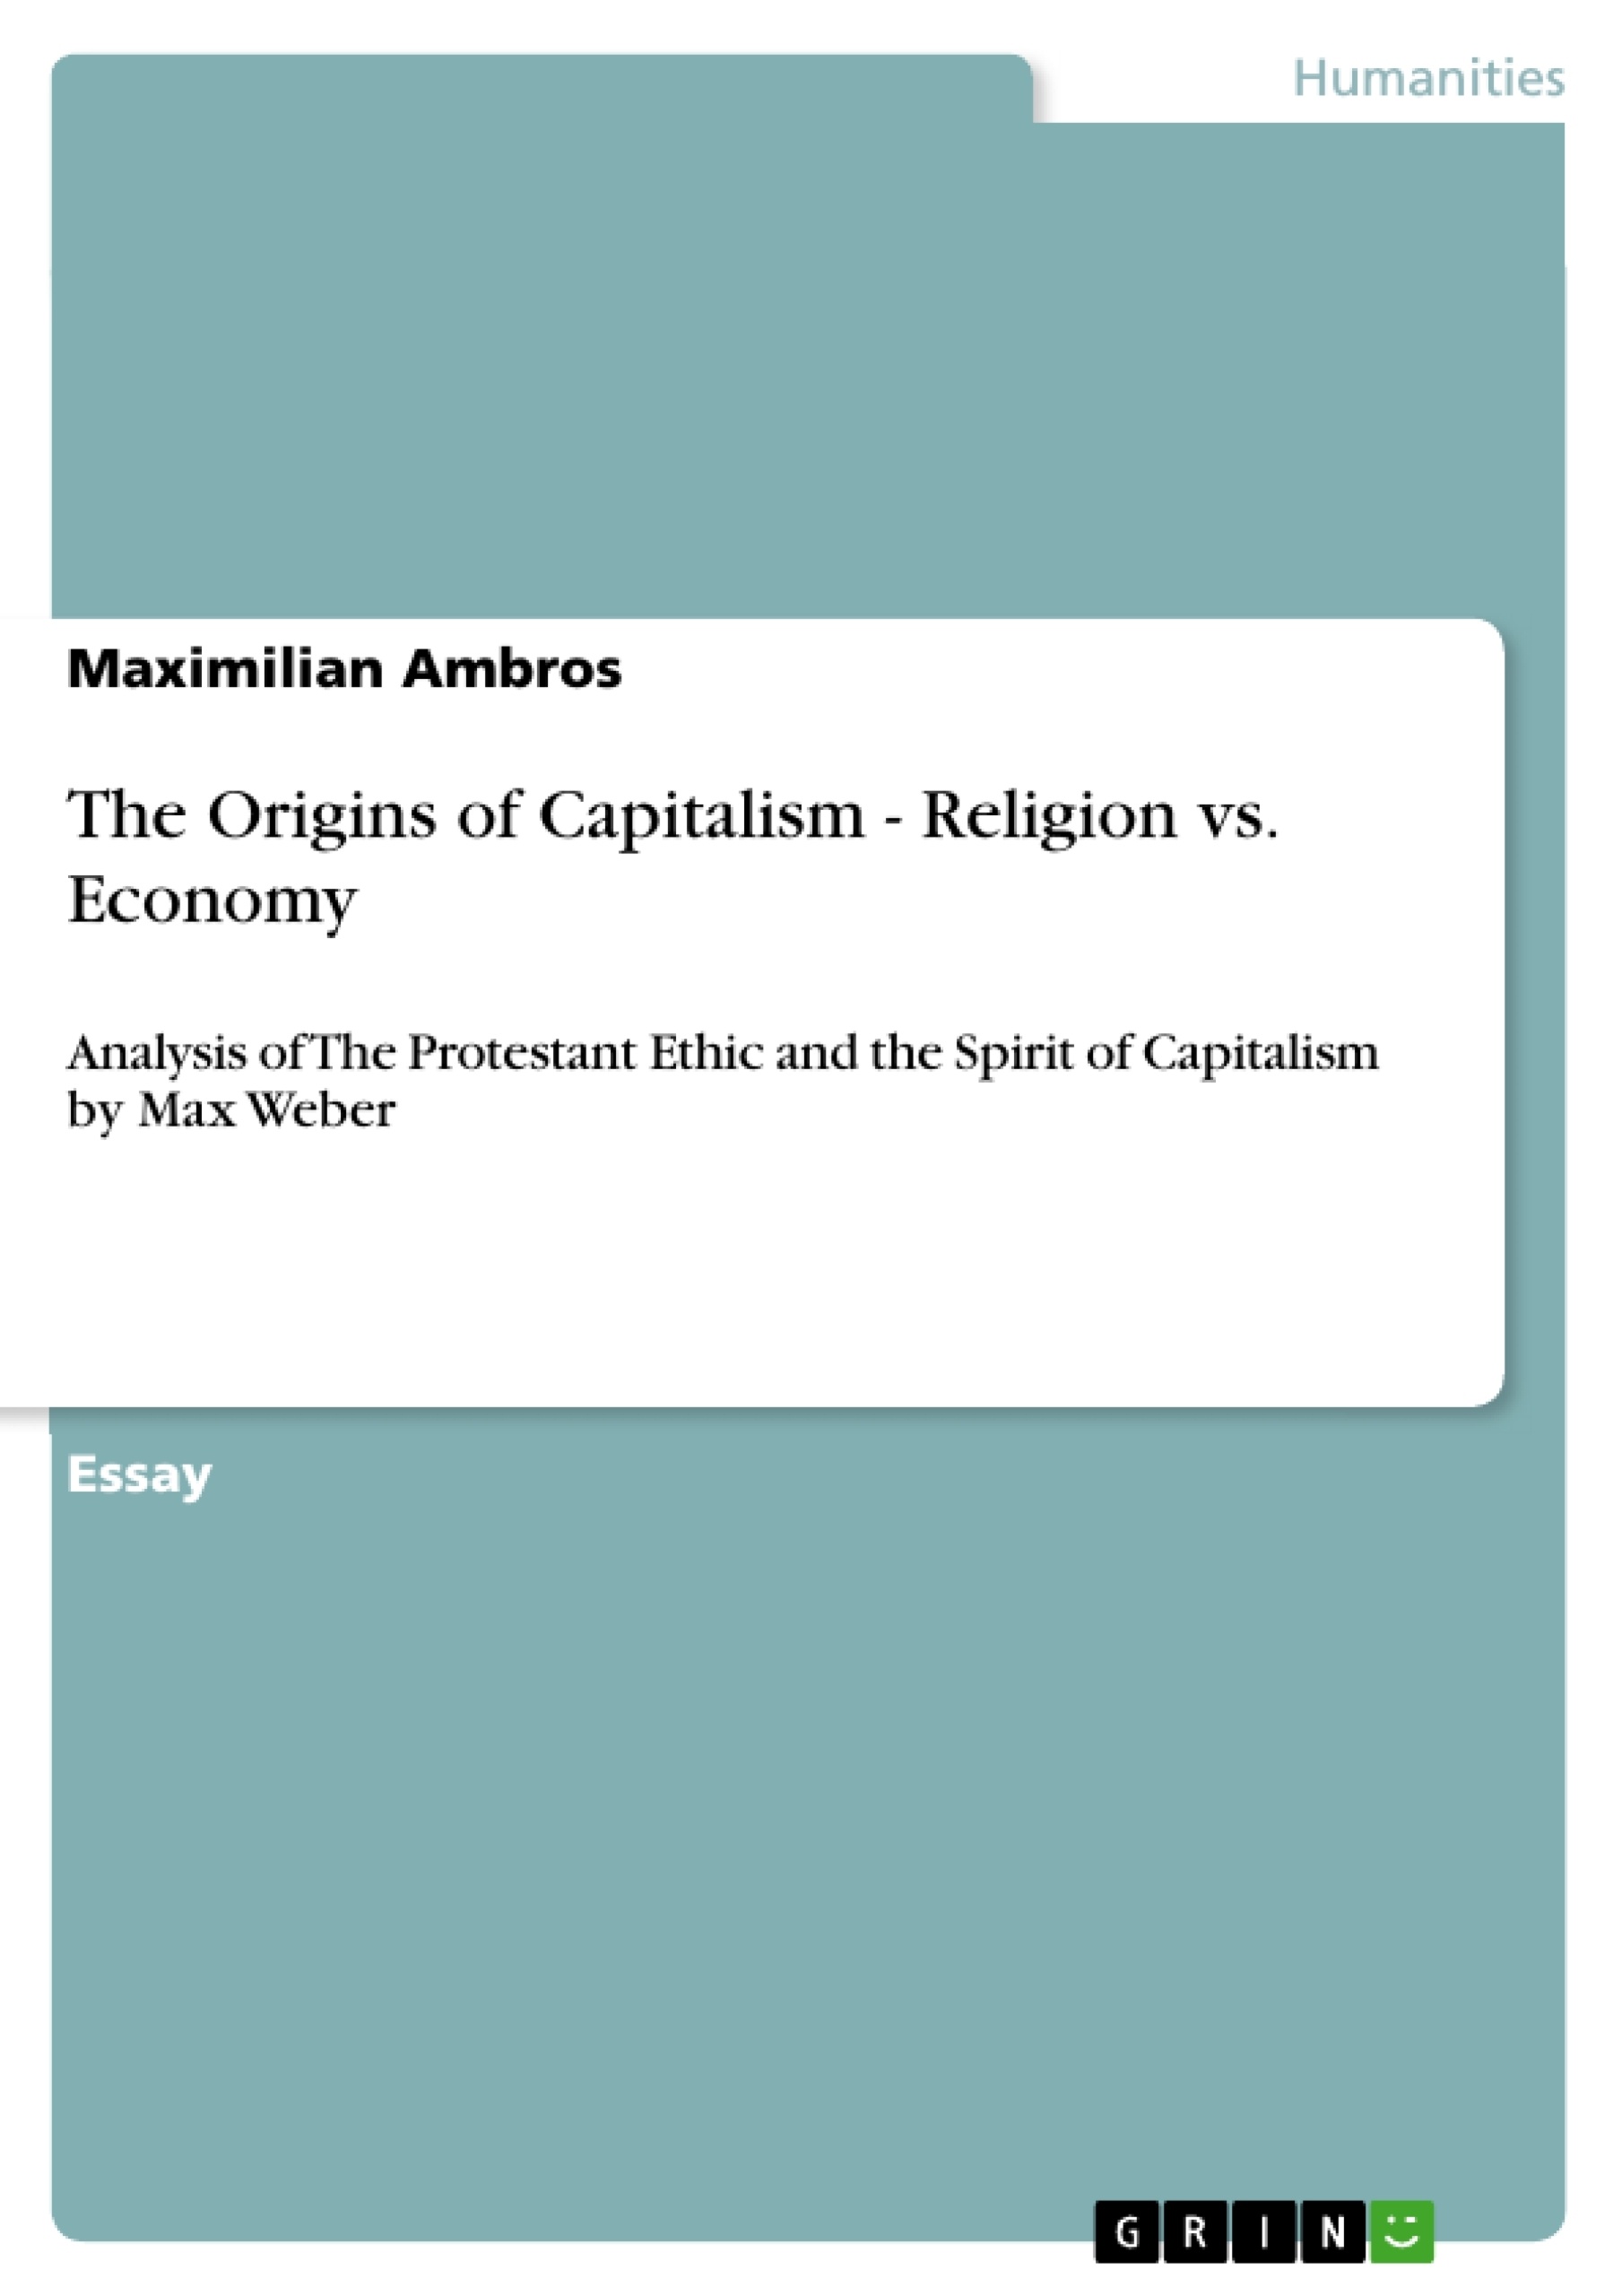 Title: The Origins of Capitalism - Religion vs. Economy